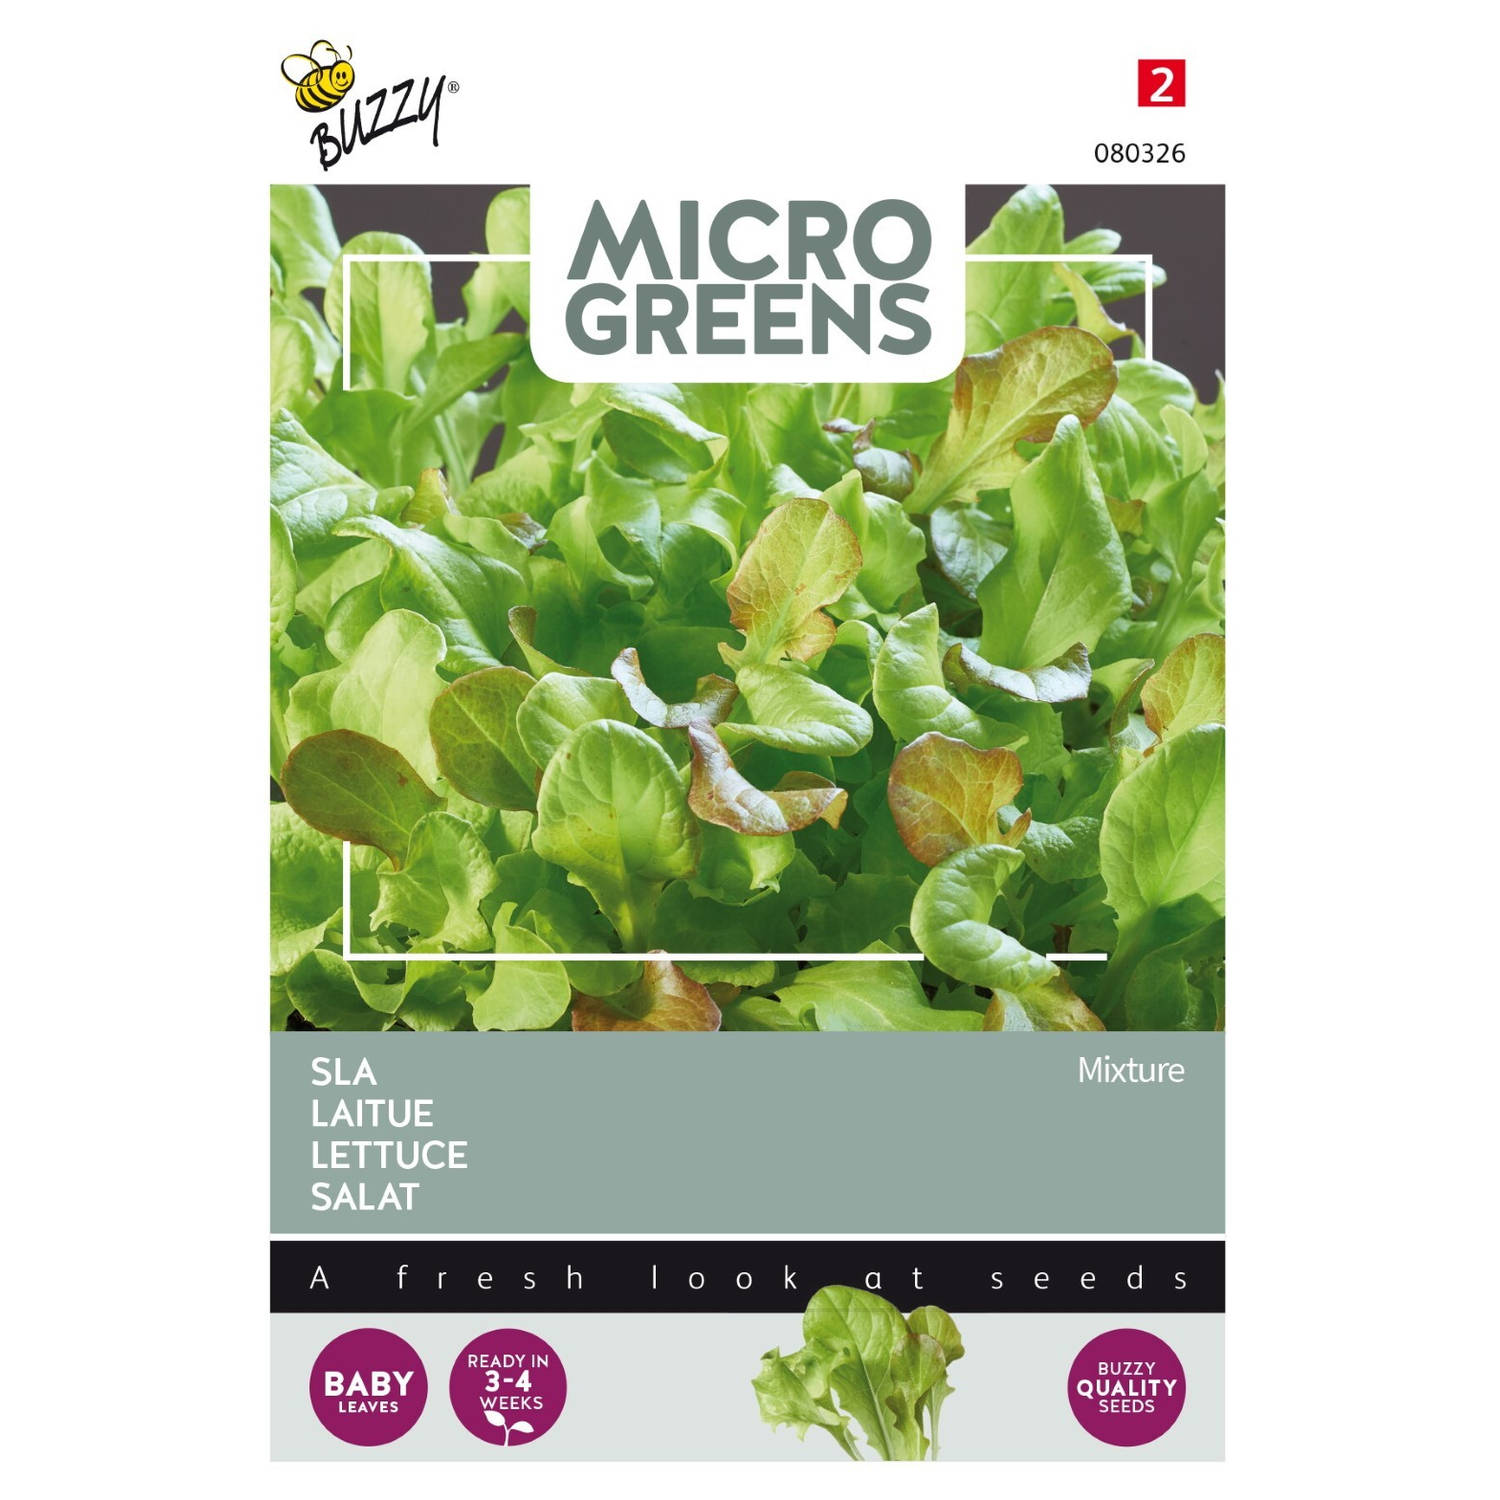 Buzzy - 5 stuks Microgreens Sla gemengd